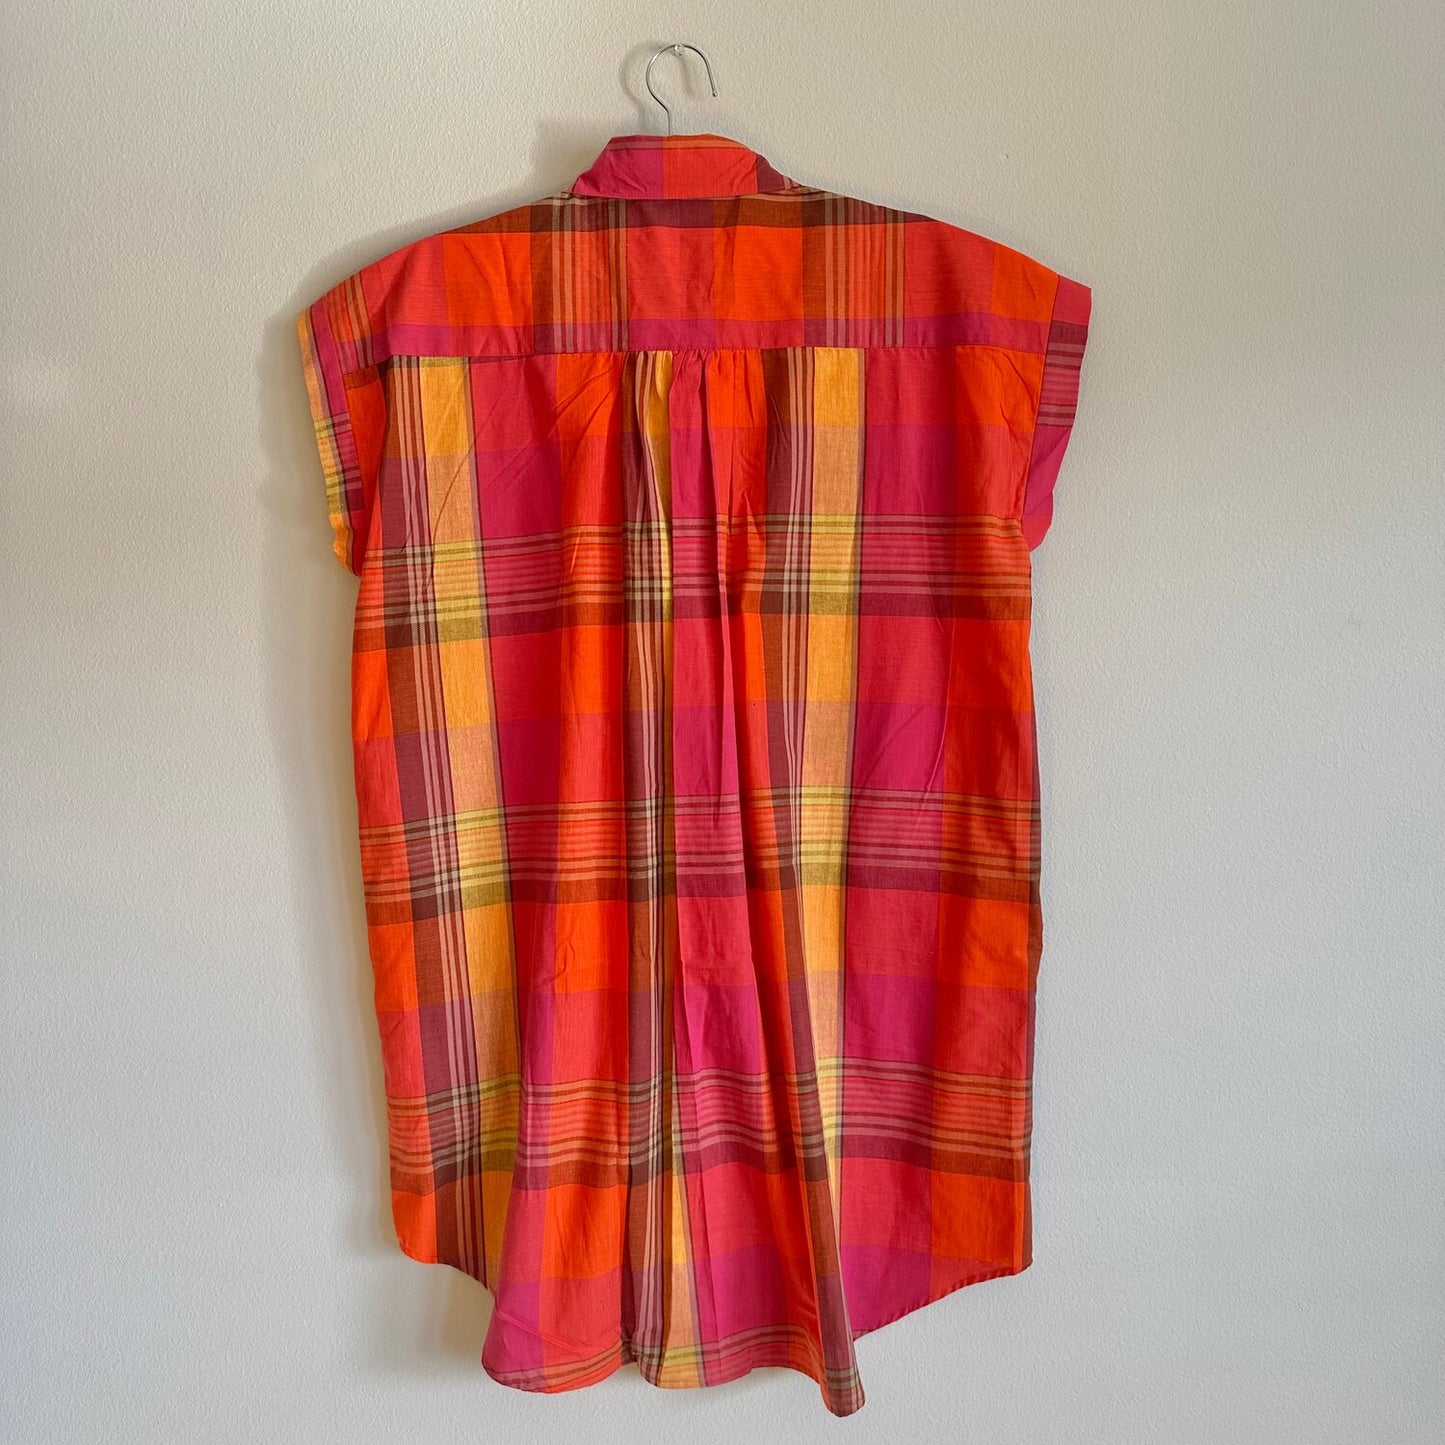 Willamette Vintage Madras Shirt Dress - SZ OSP2